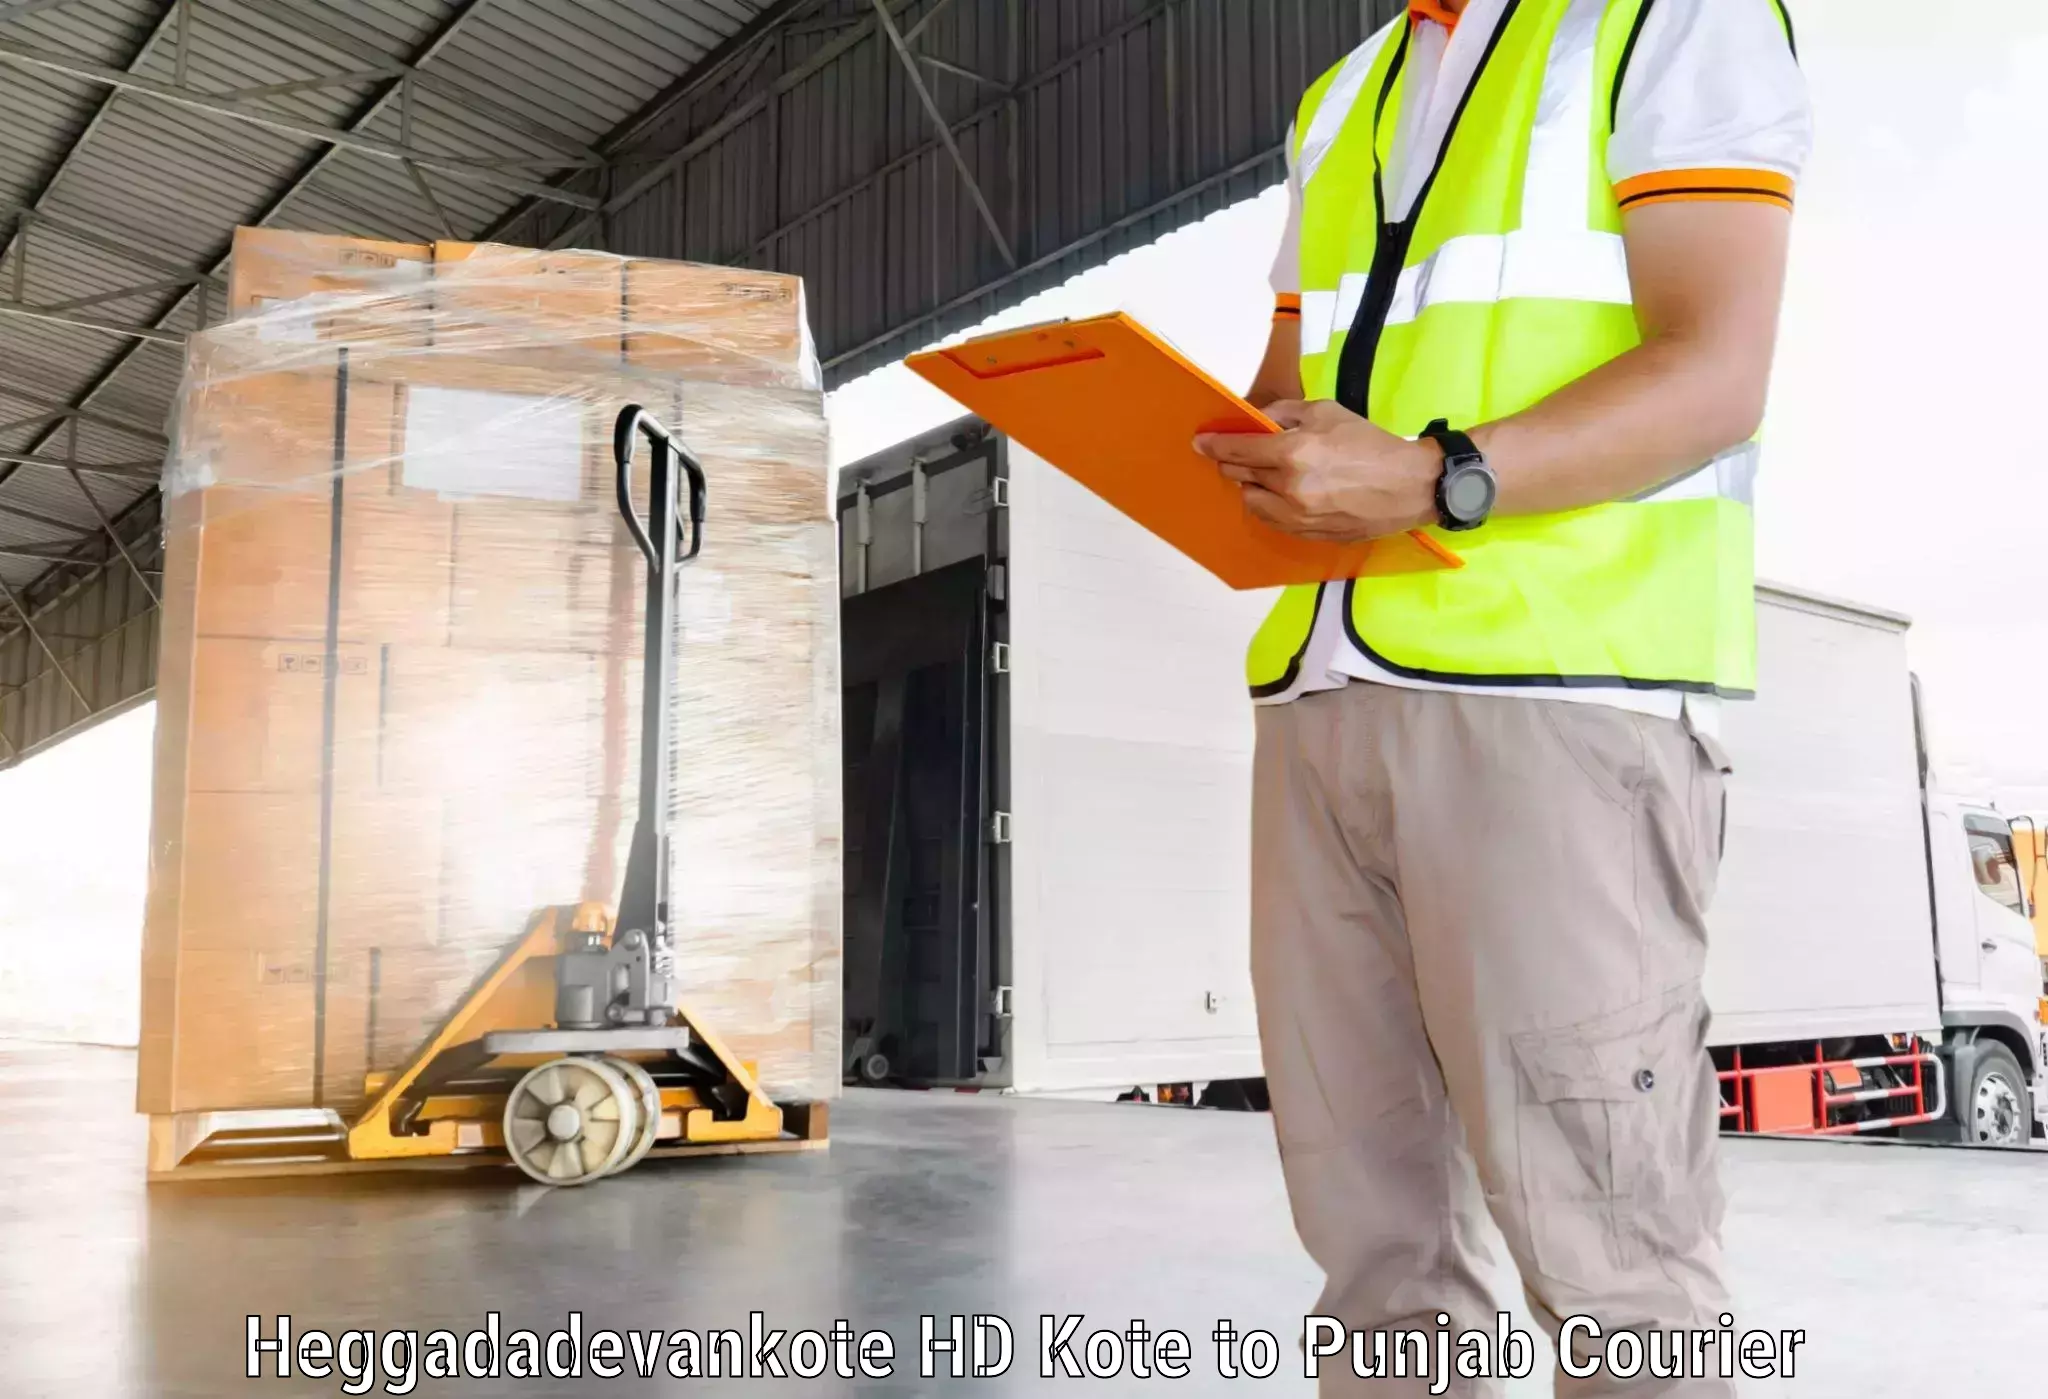 Cargo delivery service Heggadadevankote HD Kote to Abohar